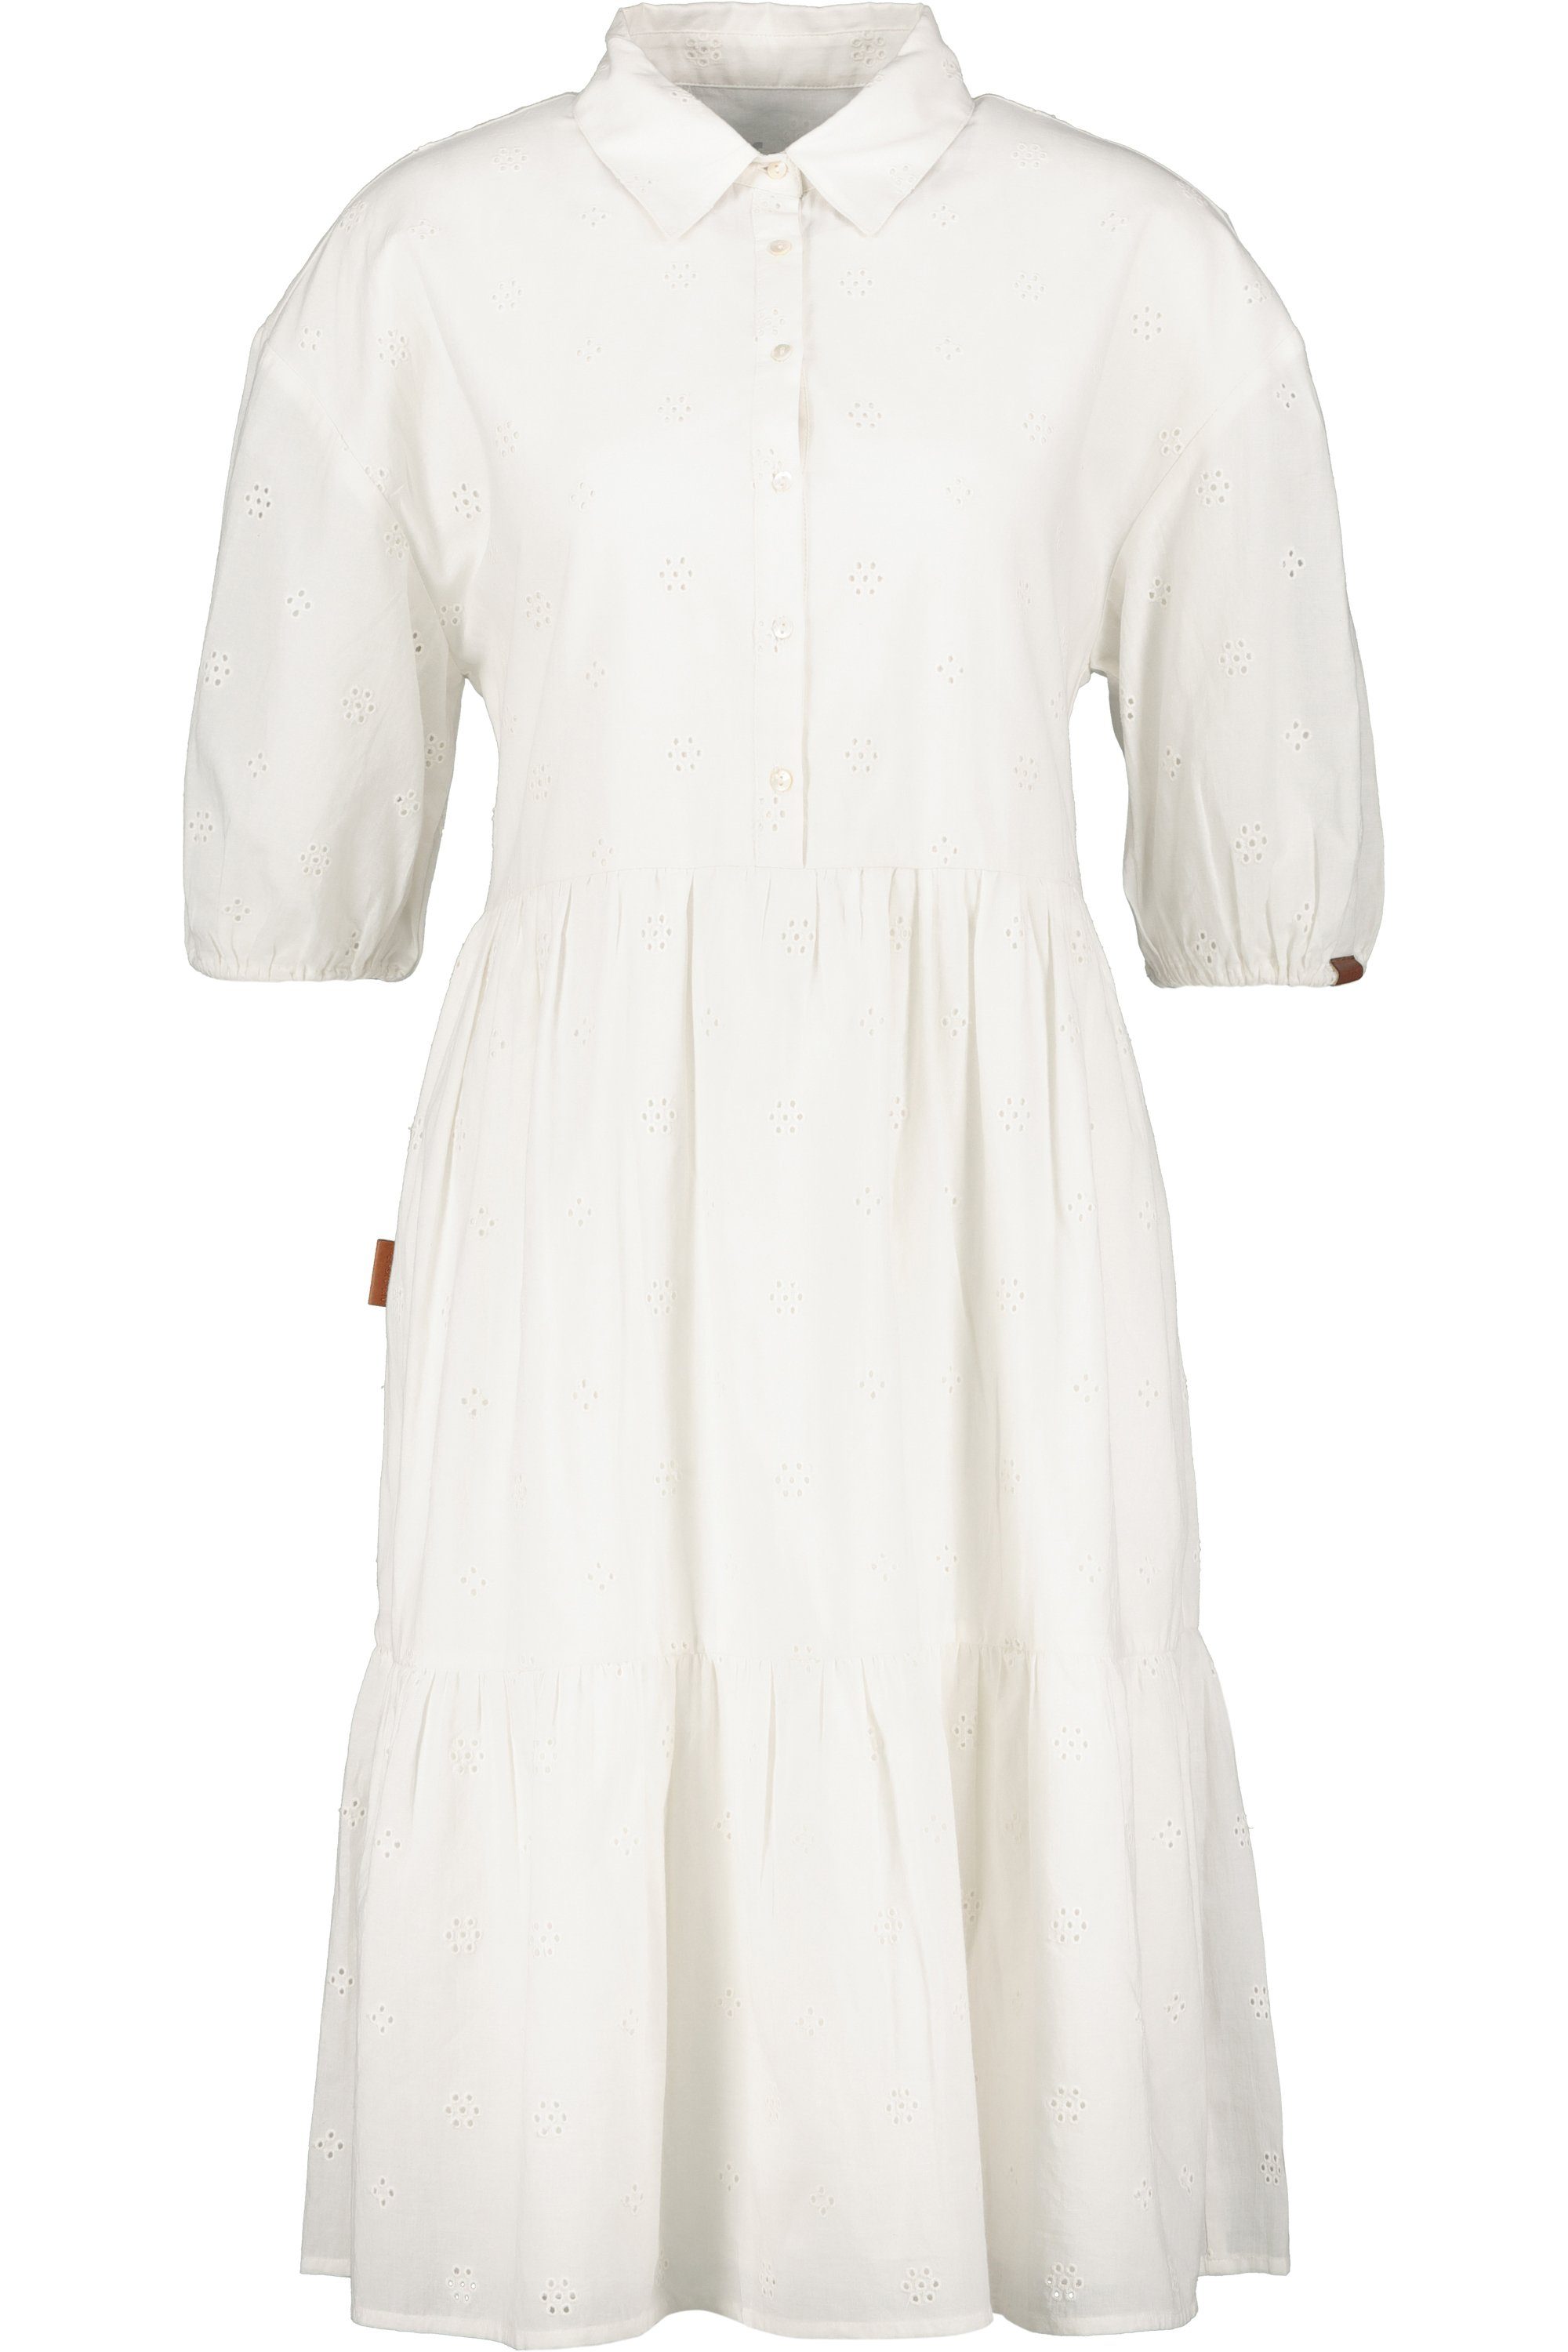 E & SalomeAK Kickin Sommerkleid, white Kleid Dress Damen Alife Jerseykleid